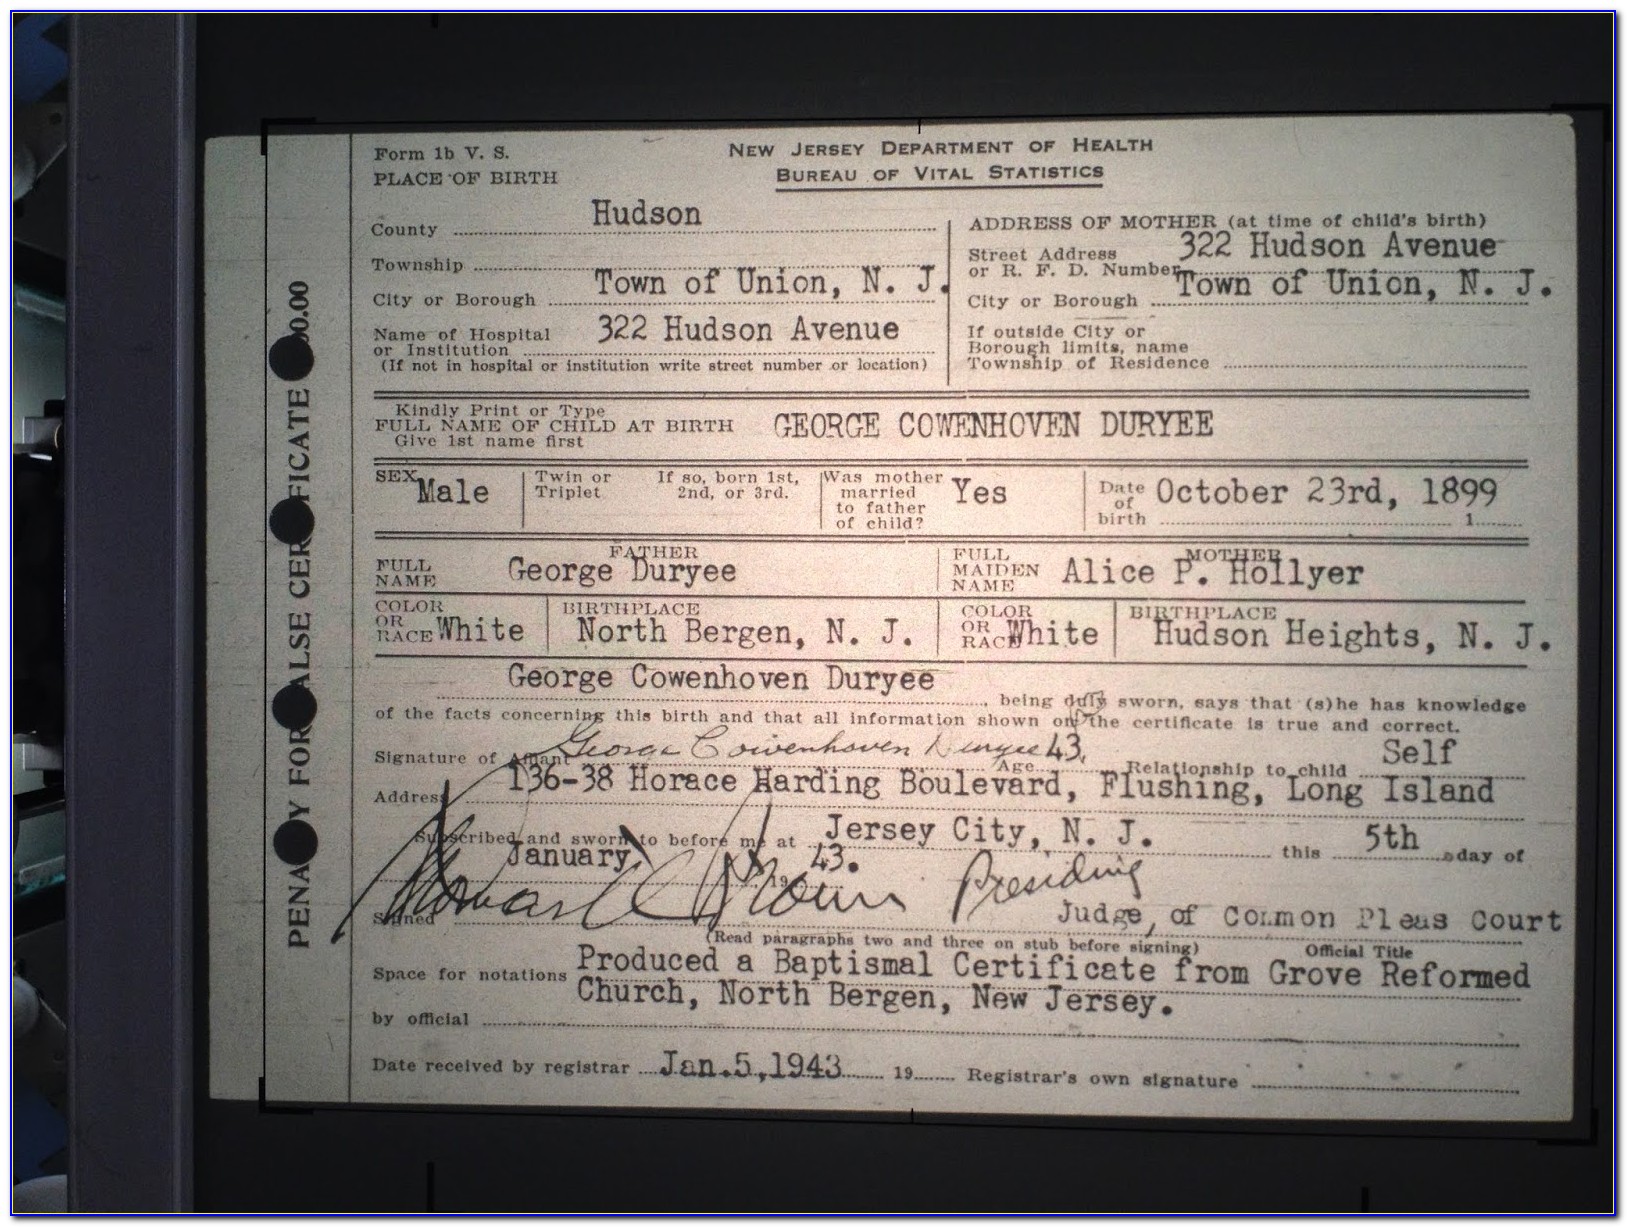 Pawtucket City Hall Birth Certificate